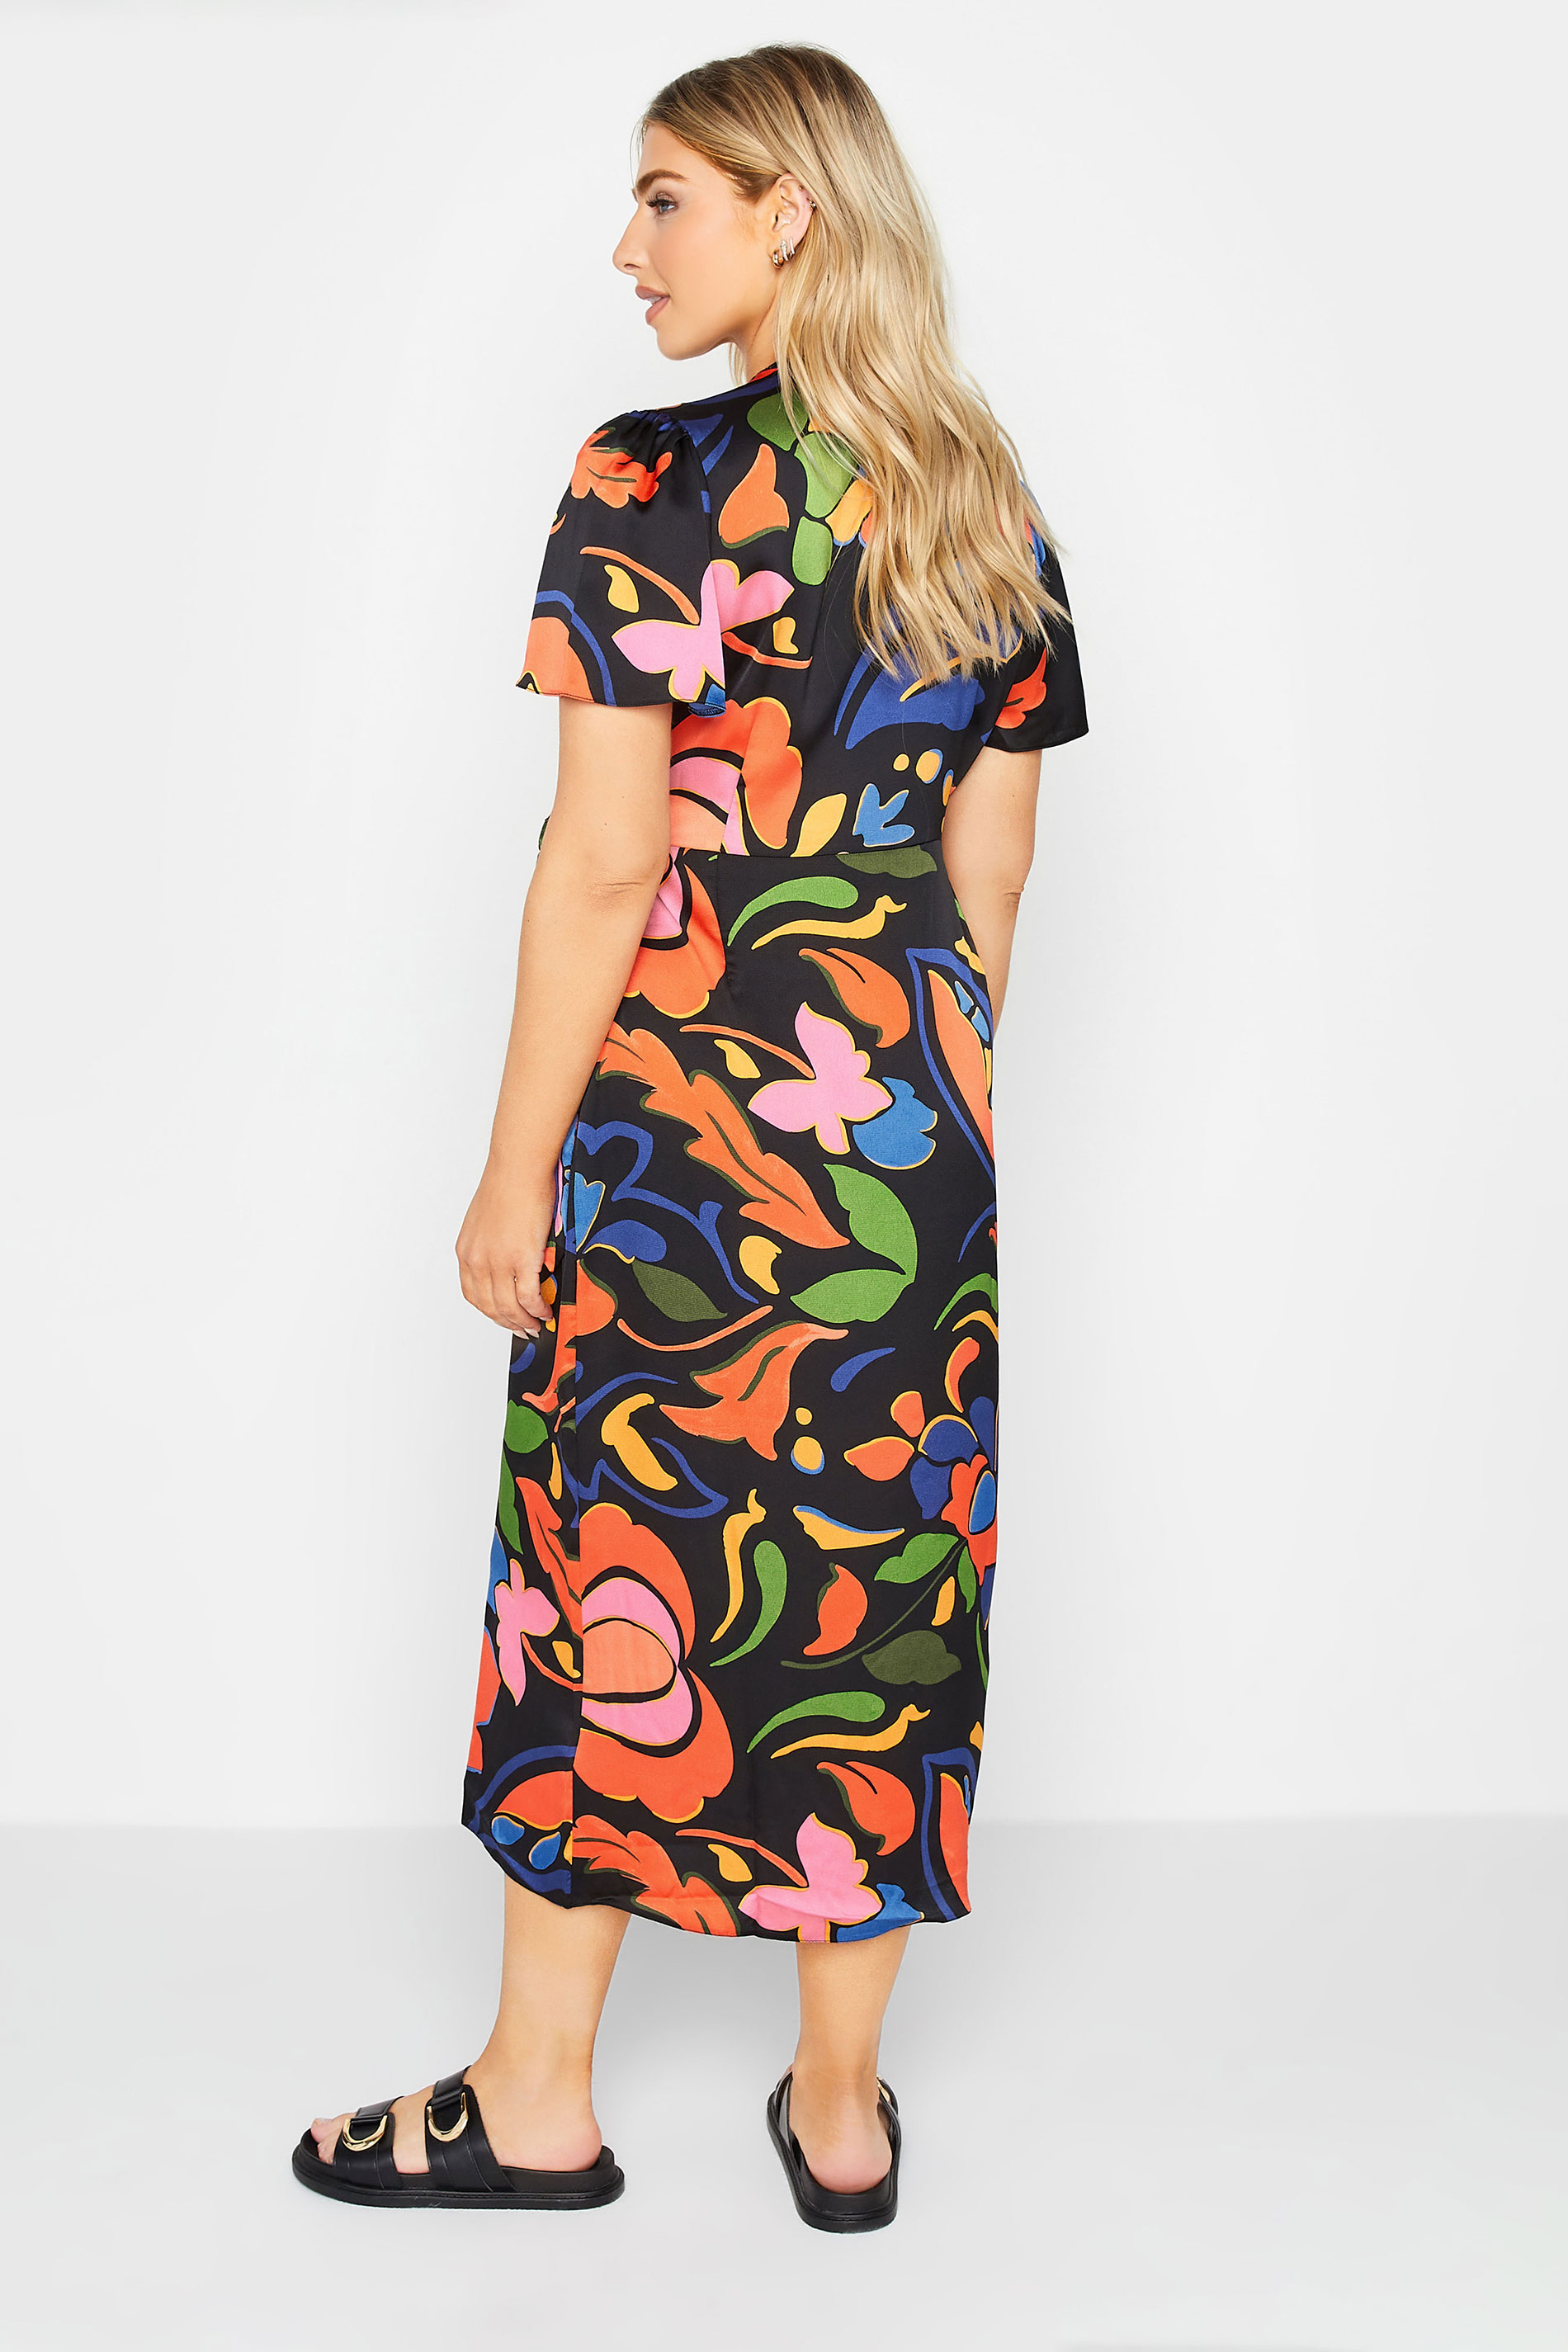 M&Co Black Floral Print Wrap Dress | M&Co 3